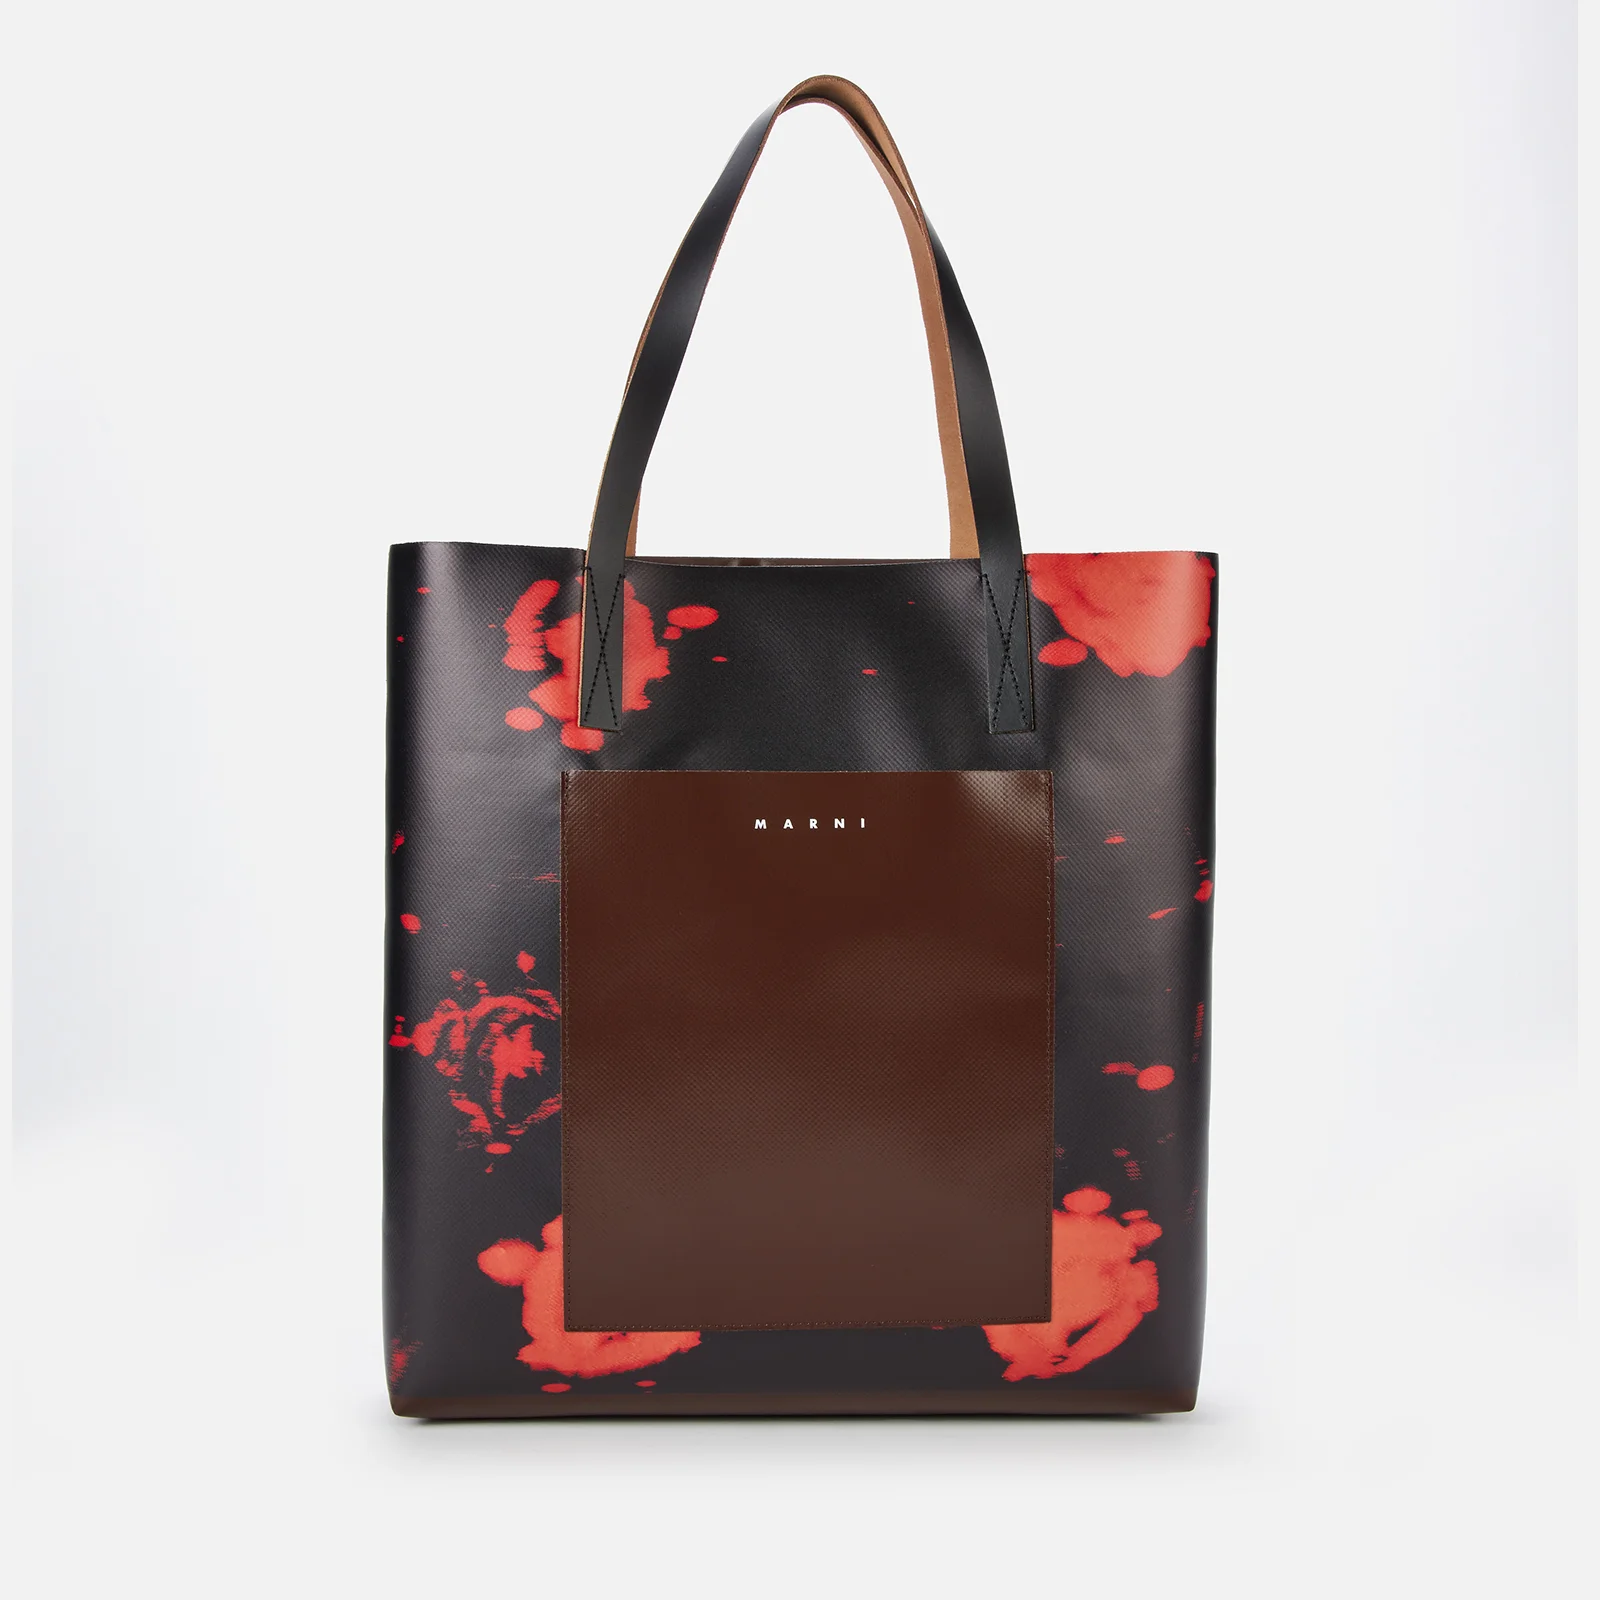 Marni Women's Pvc Faded Roses Bag - Black/Coffee Image 1